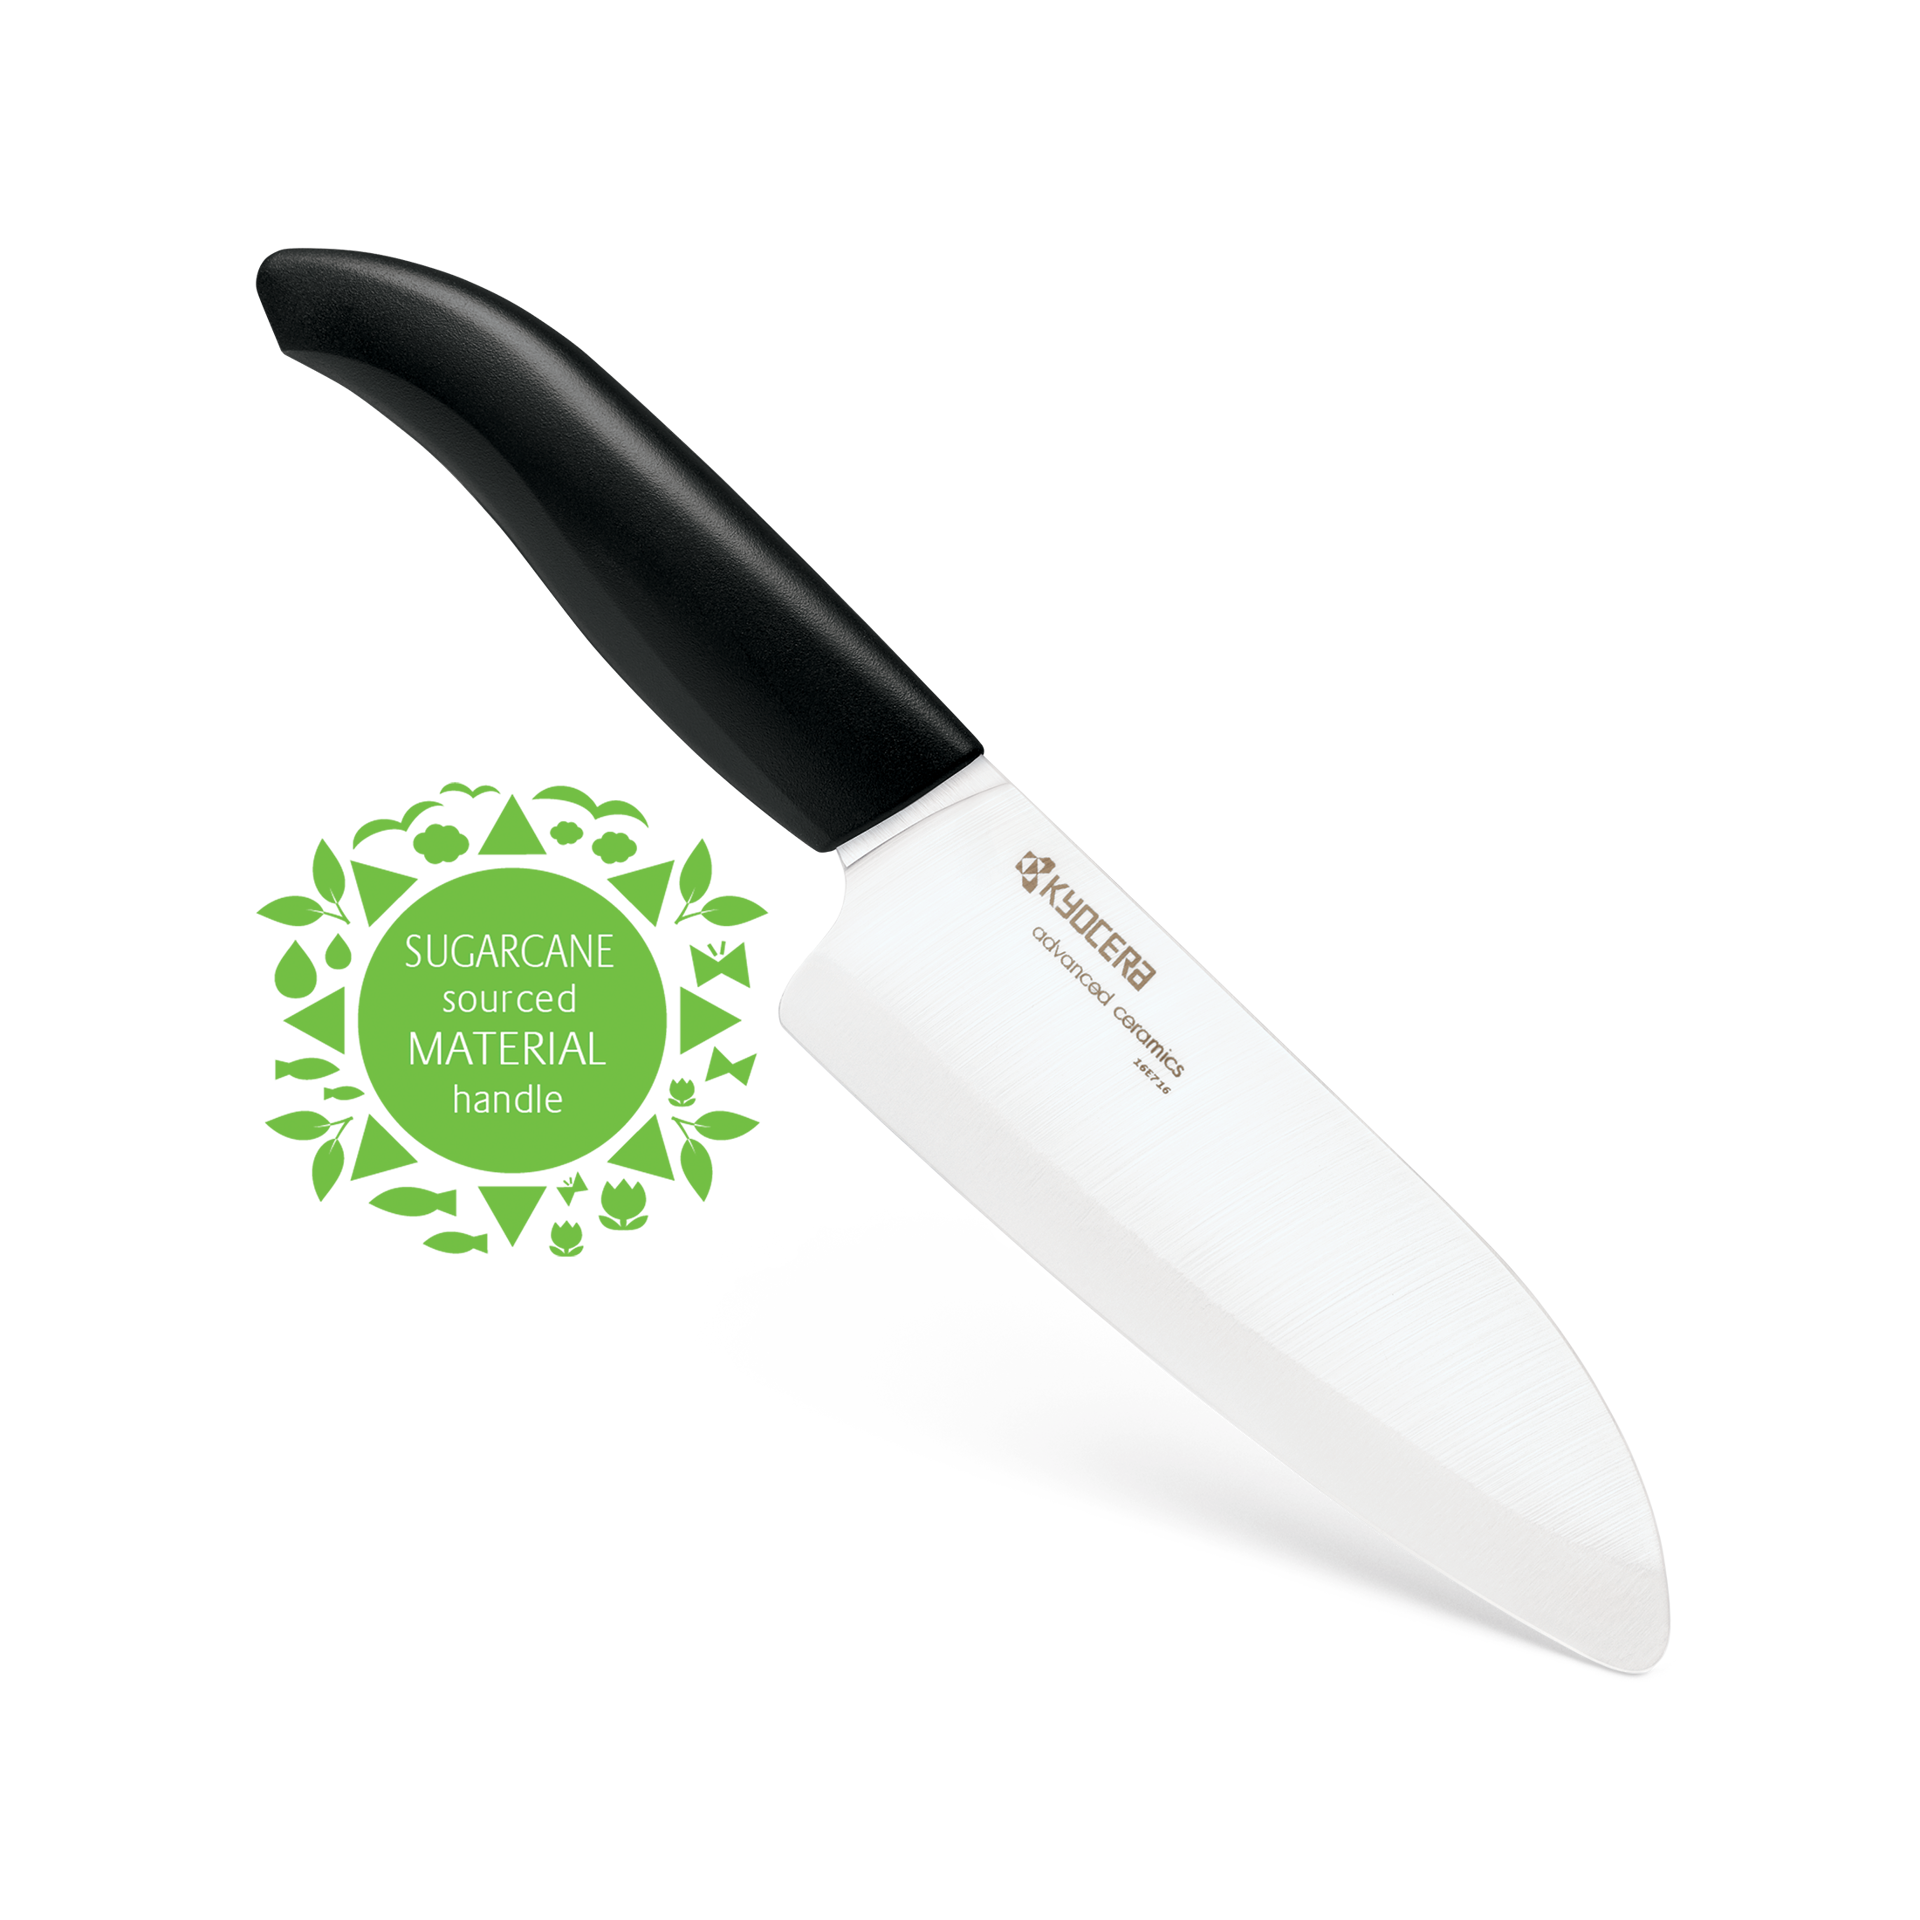 Kyocera Electric Diamond Ceramic Knife Sharpener